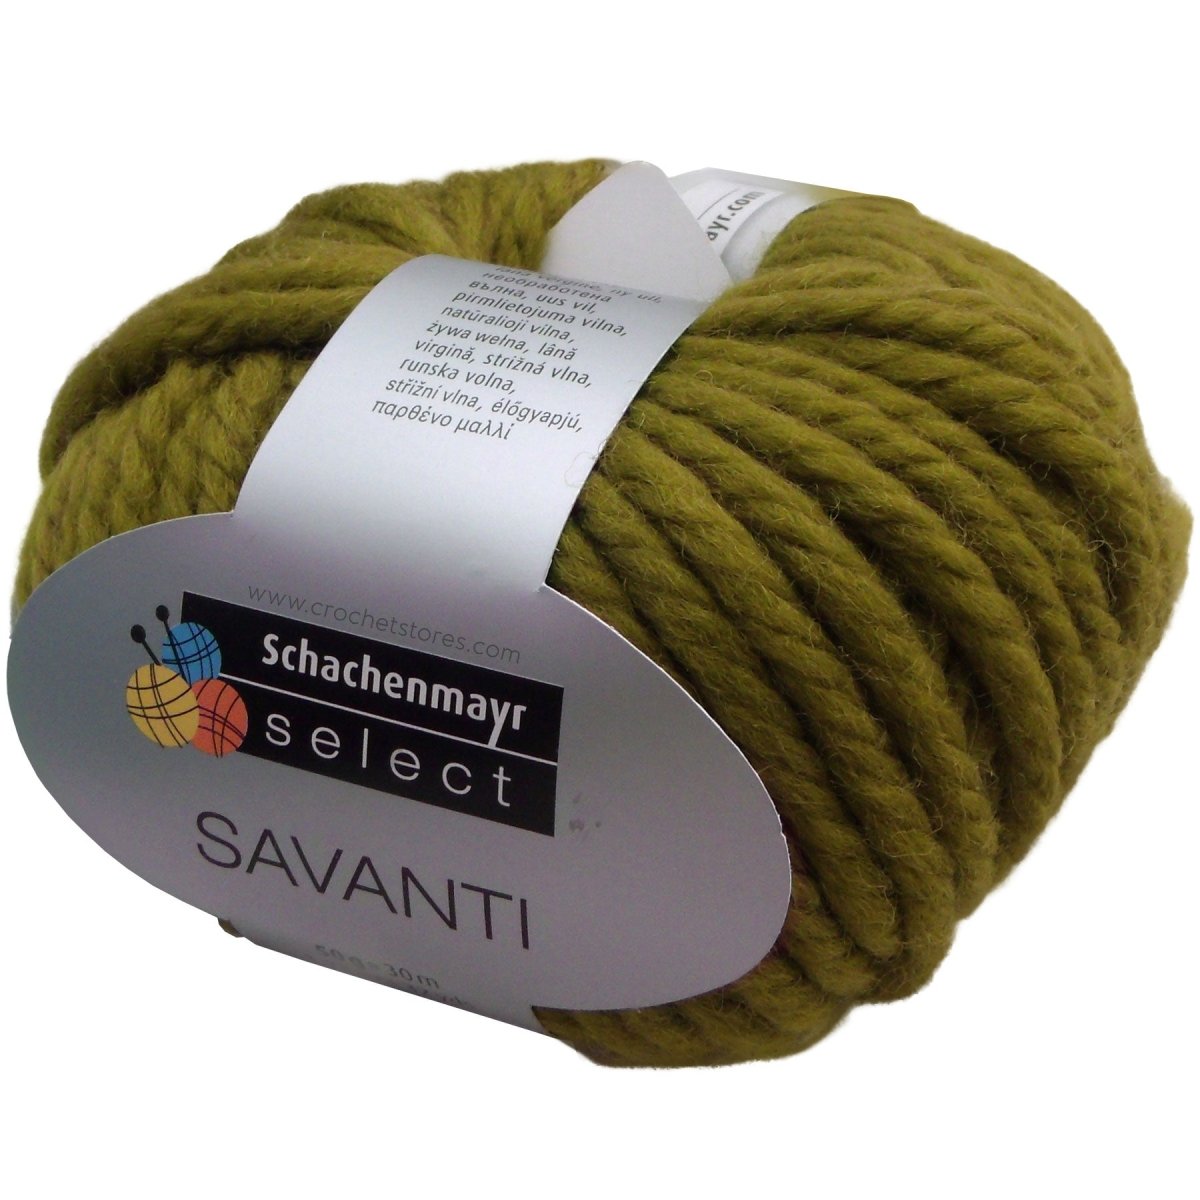 SAVANTI - Crochetstores9811771-47674082700488315